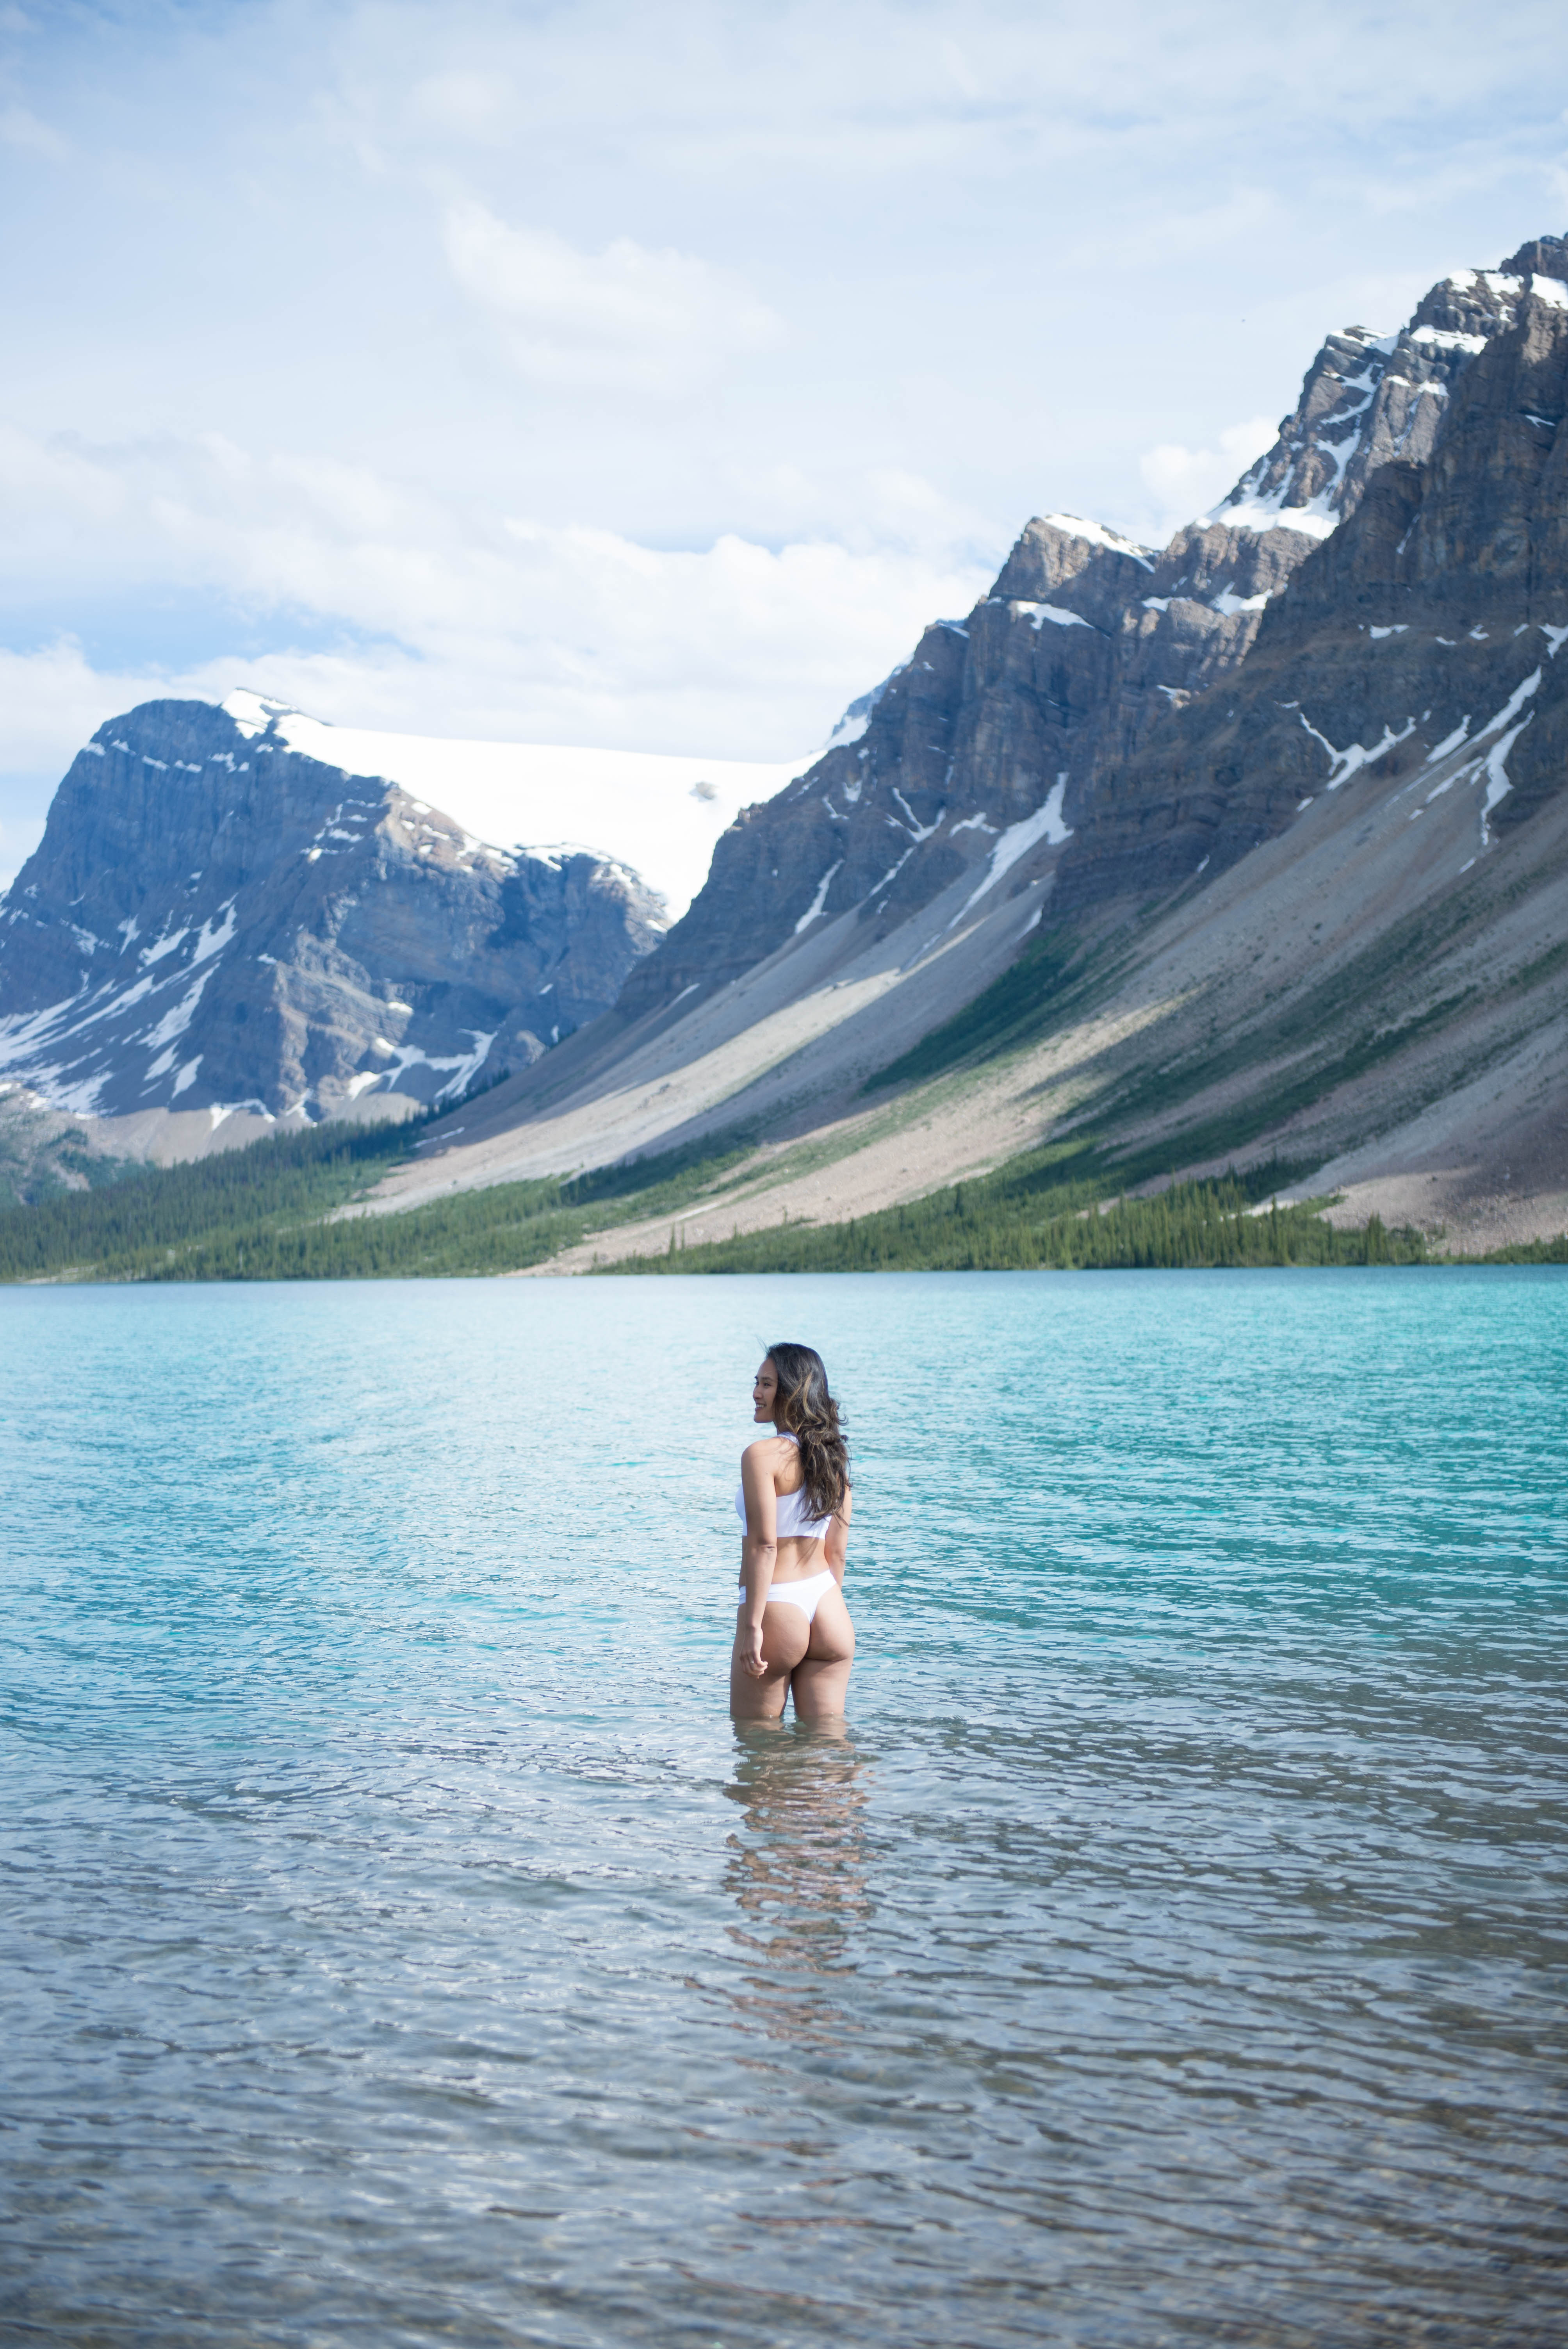 Summer Road Trip to Banff, Alberta - Swimming Bow Lake